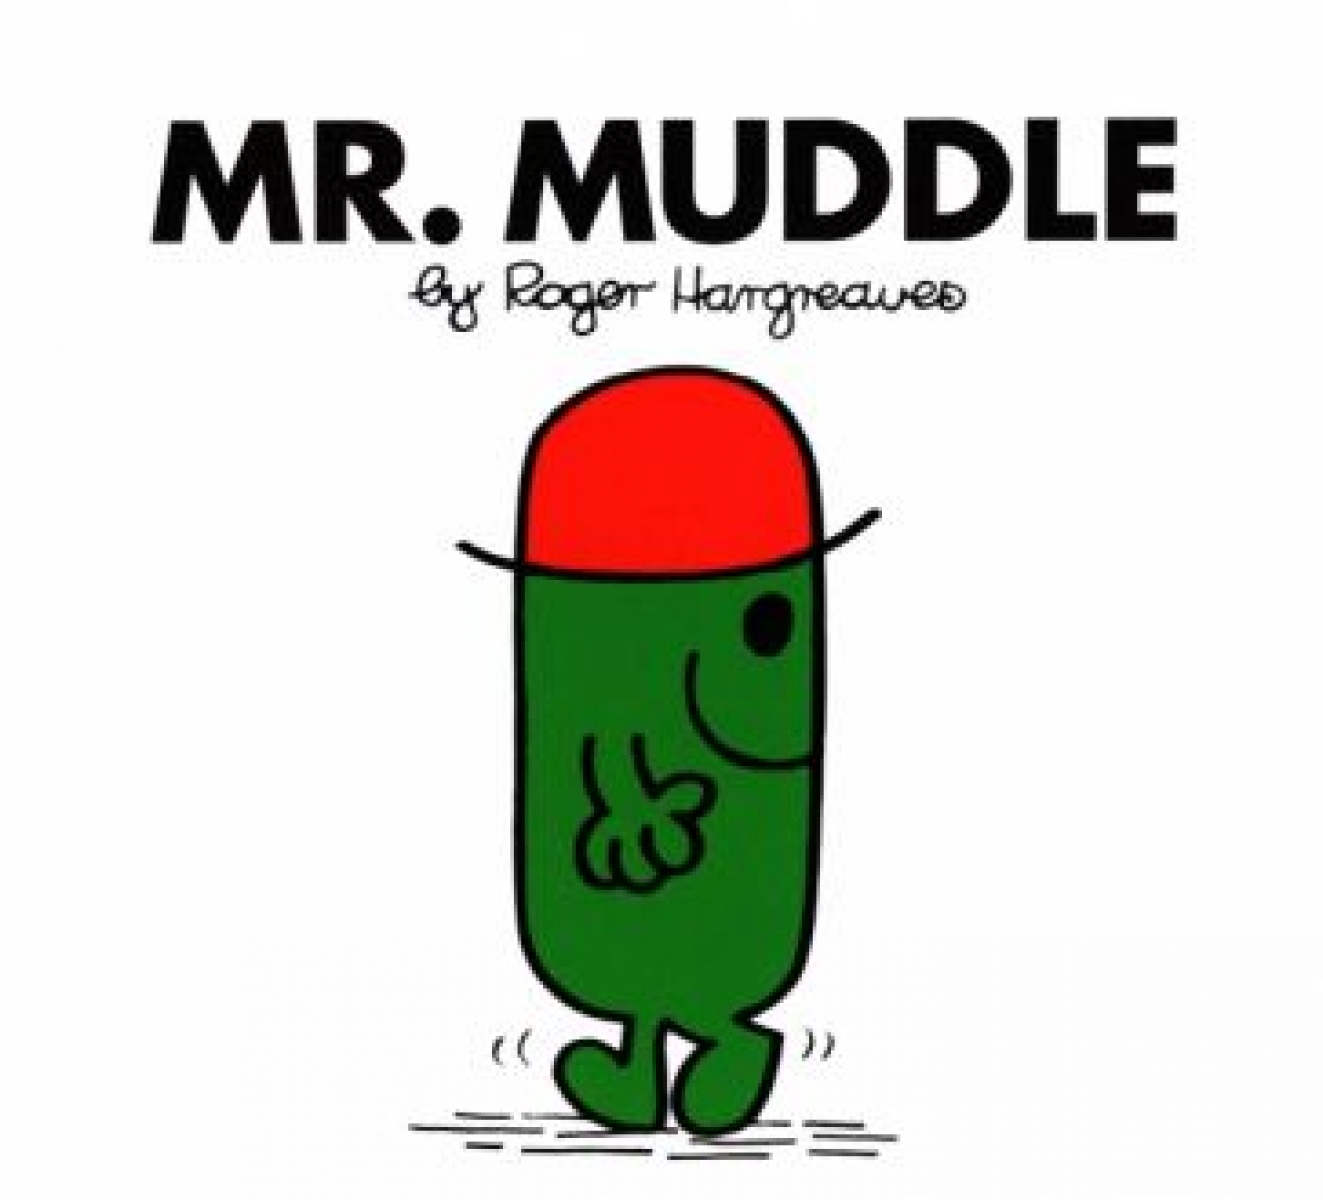 Hargreaves Roger Mr. Muddle 